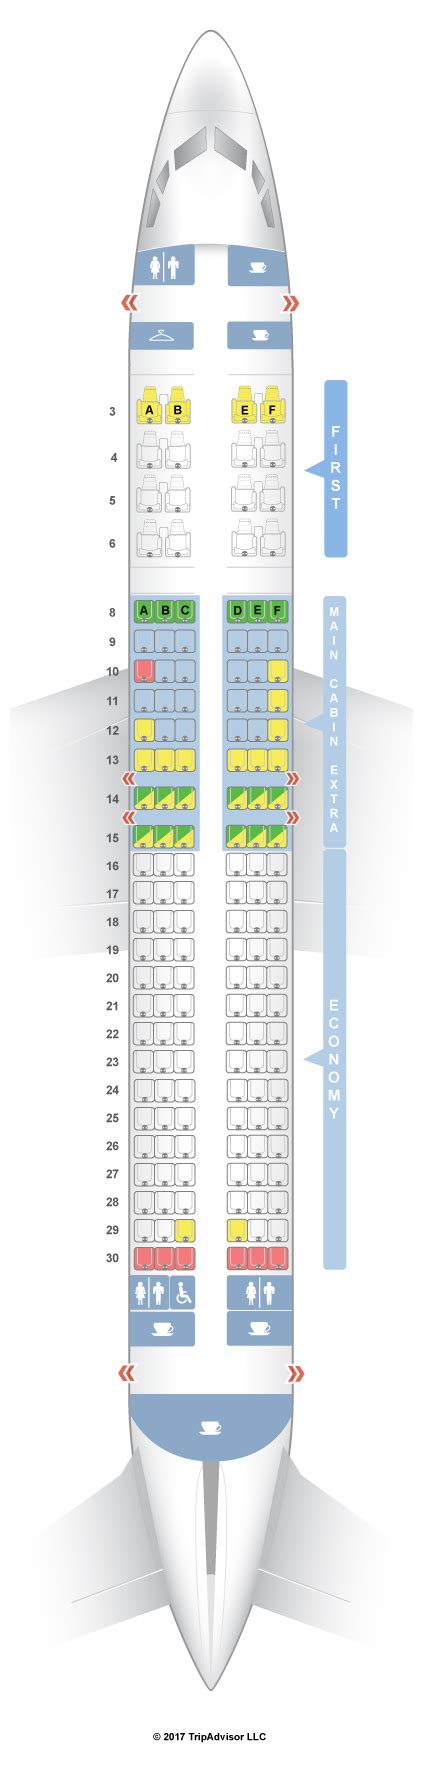 Seatguru Seat Map American Airlines Boeing 737 800 738 V2